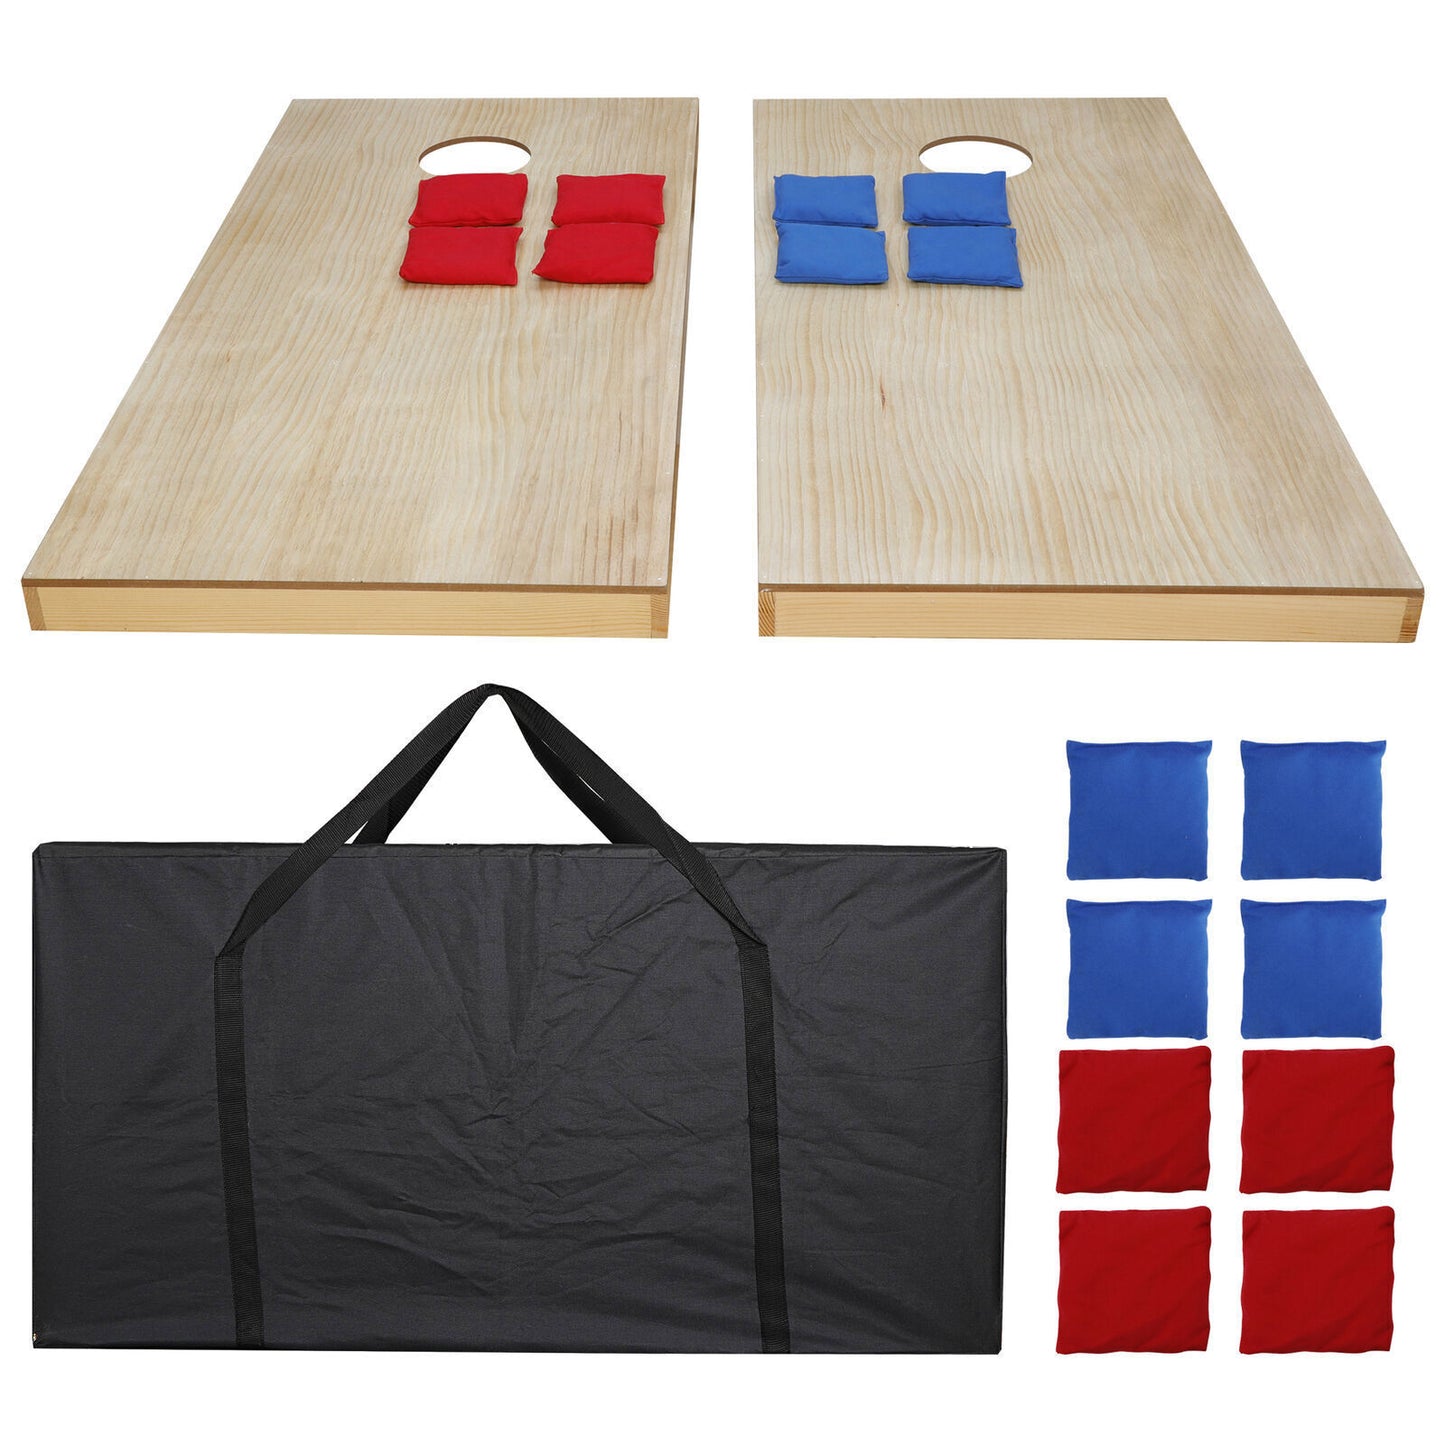 4x2' Foldable DIY Wooden Bean Bag Toss Cornhole Game Set of 2Boards & 8 Beanbags